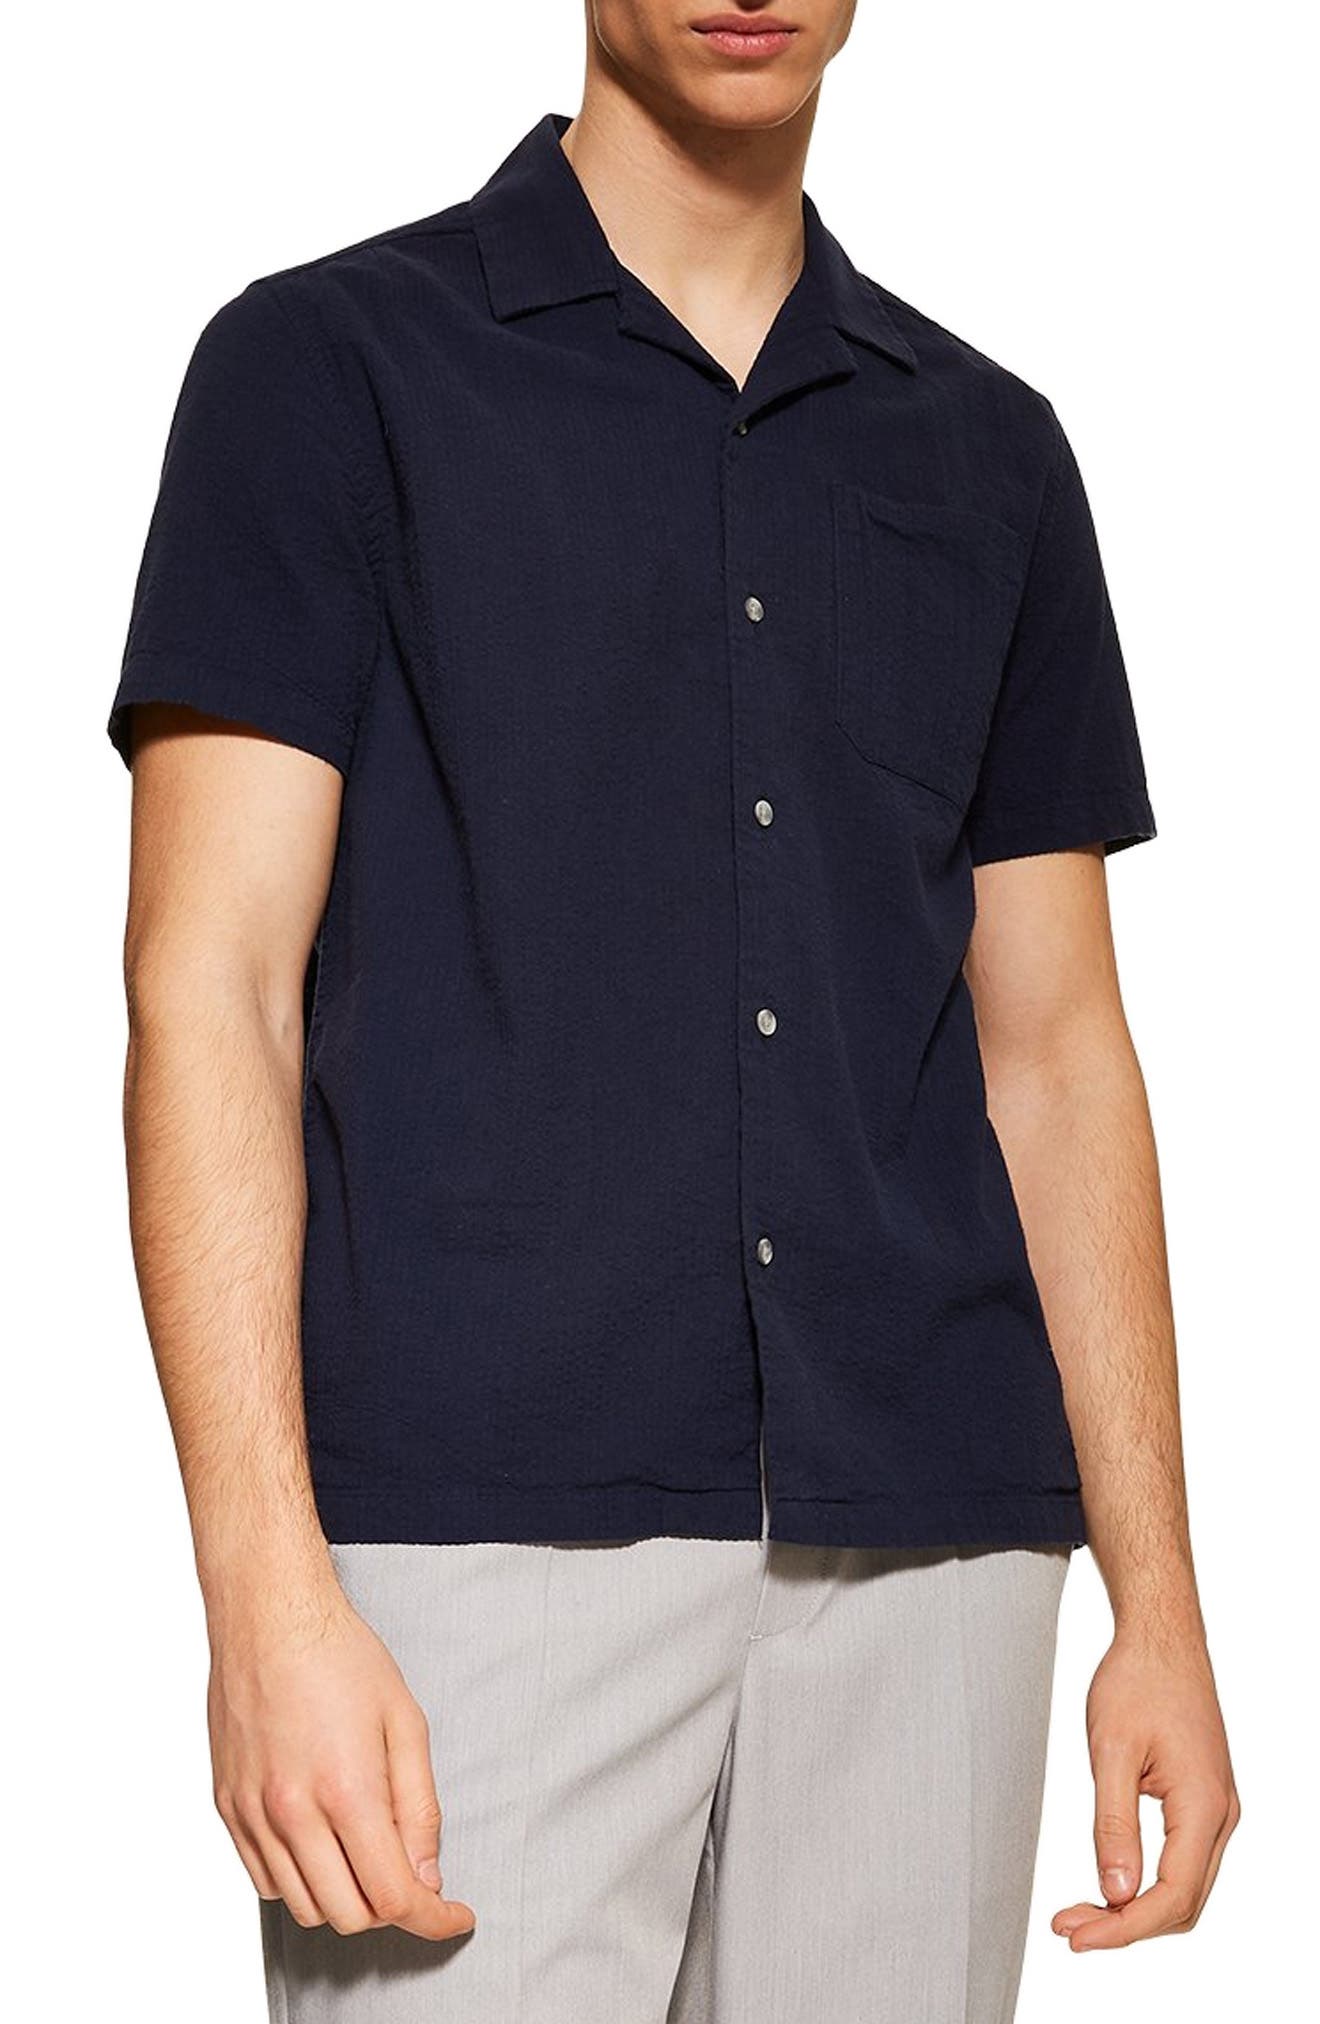 1940s Style Men's Shirts - Dress, Sport, T Shirts